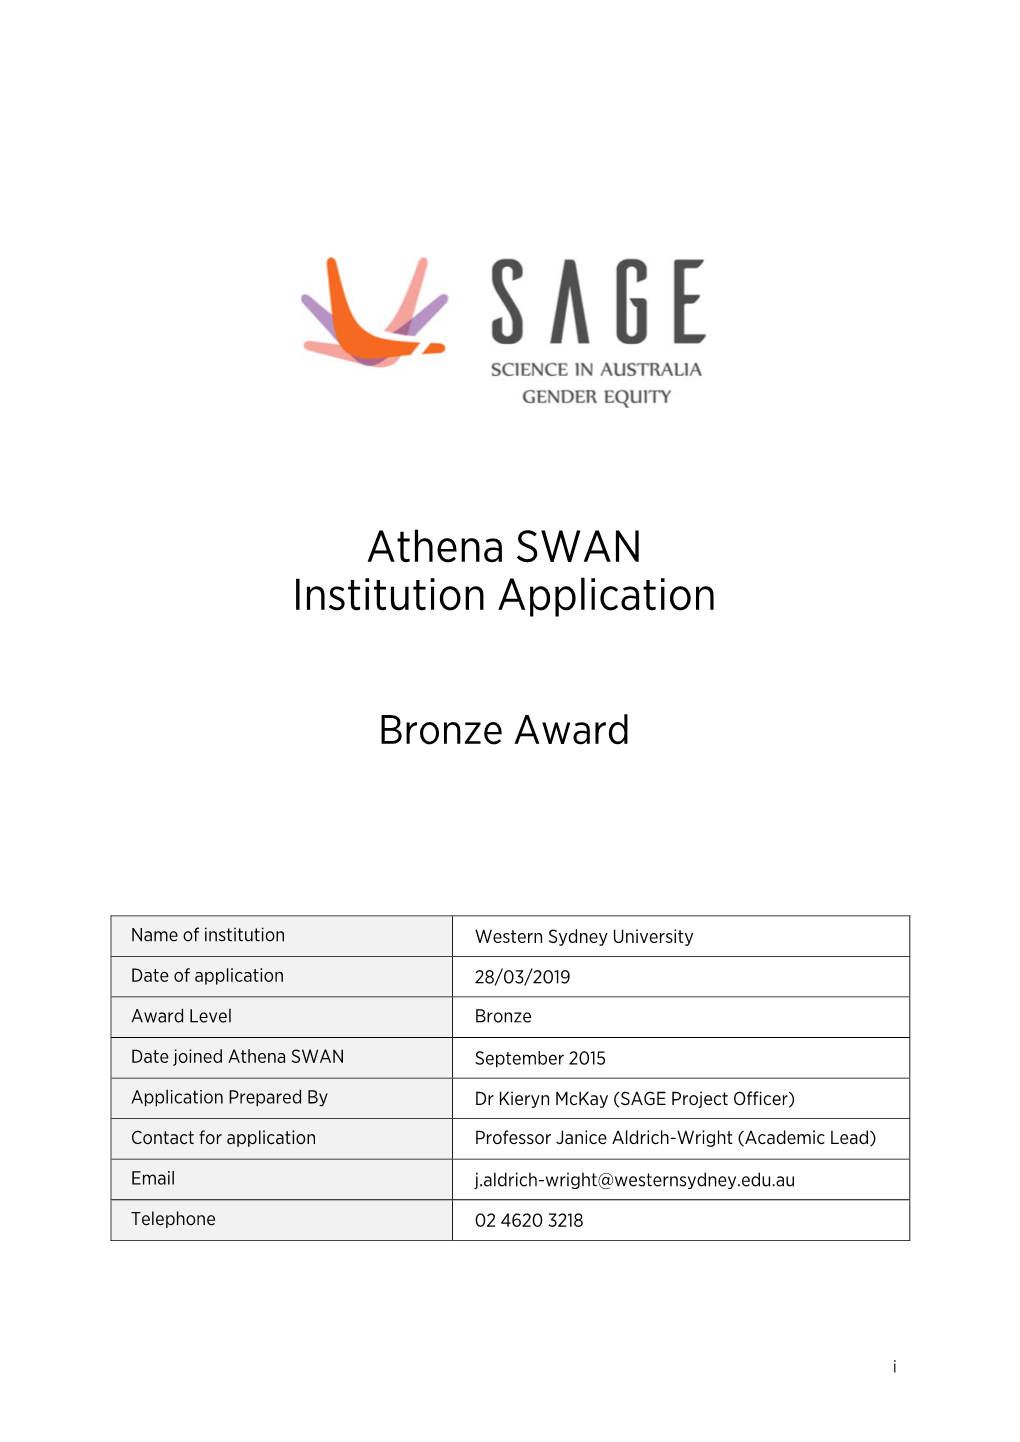 Athena SWAN Institution Application